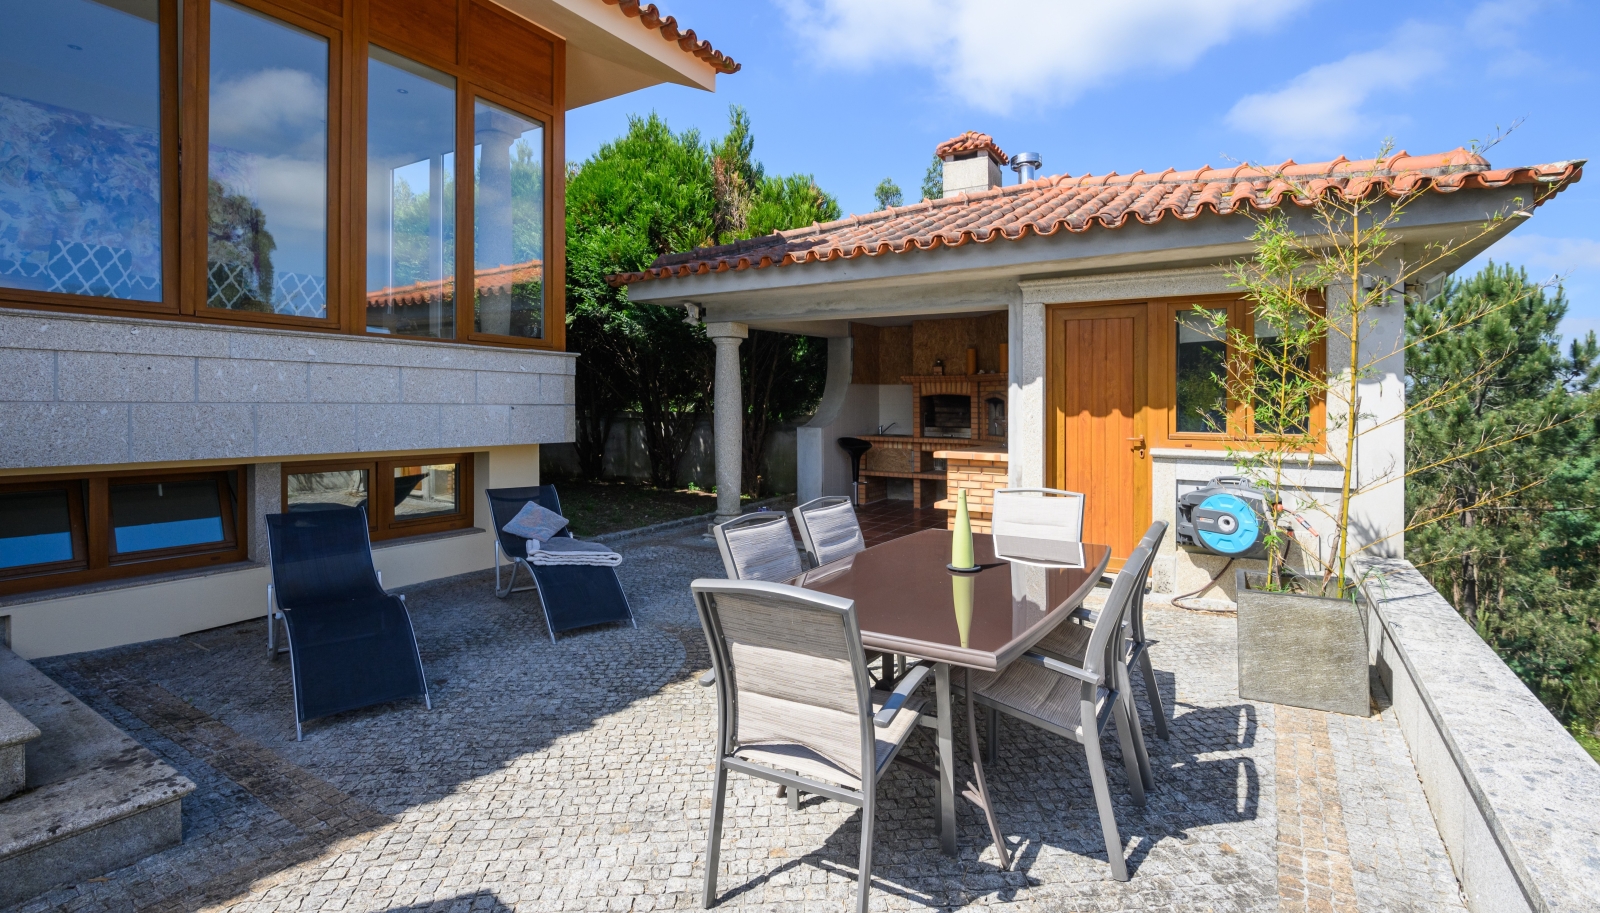 5 bedroom villa with garden and views, for sale, in Foz do Sousa in Gondomar, Porto, Portugal_225223